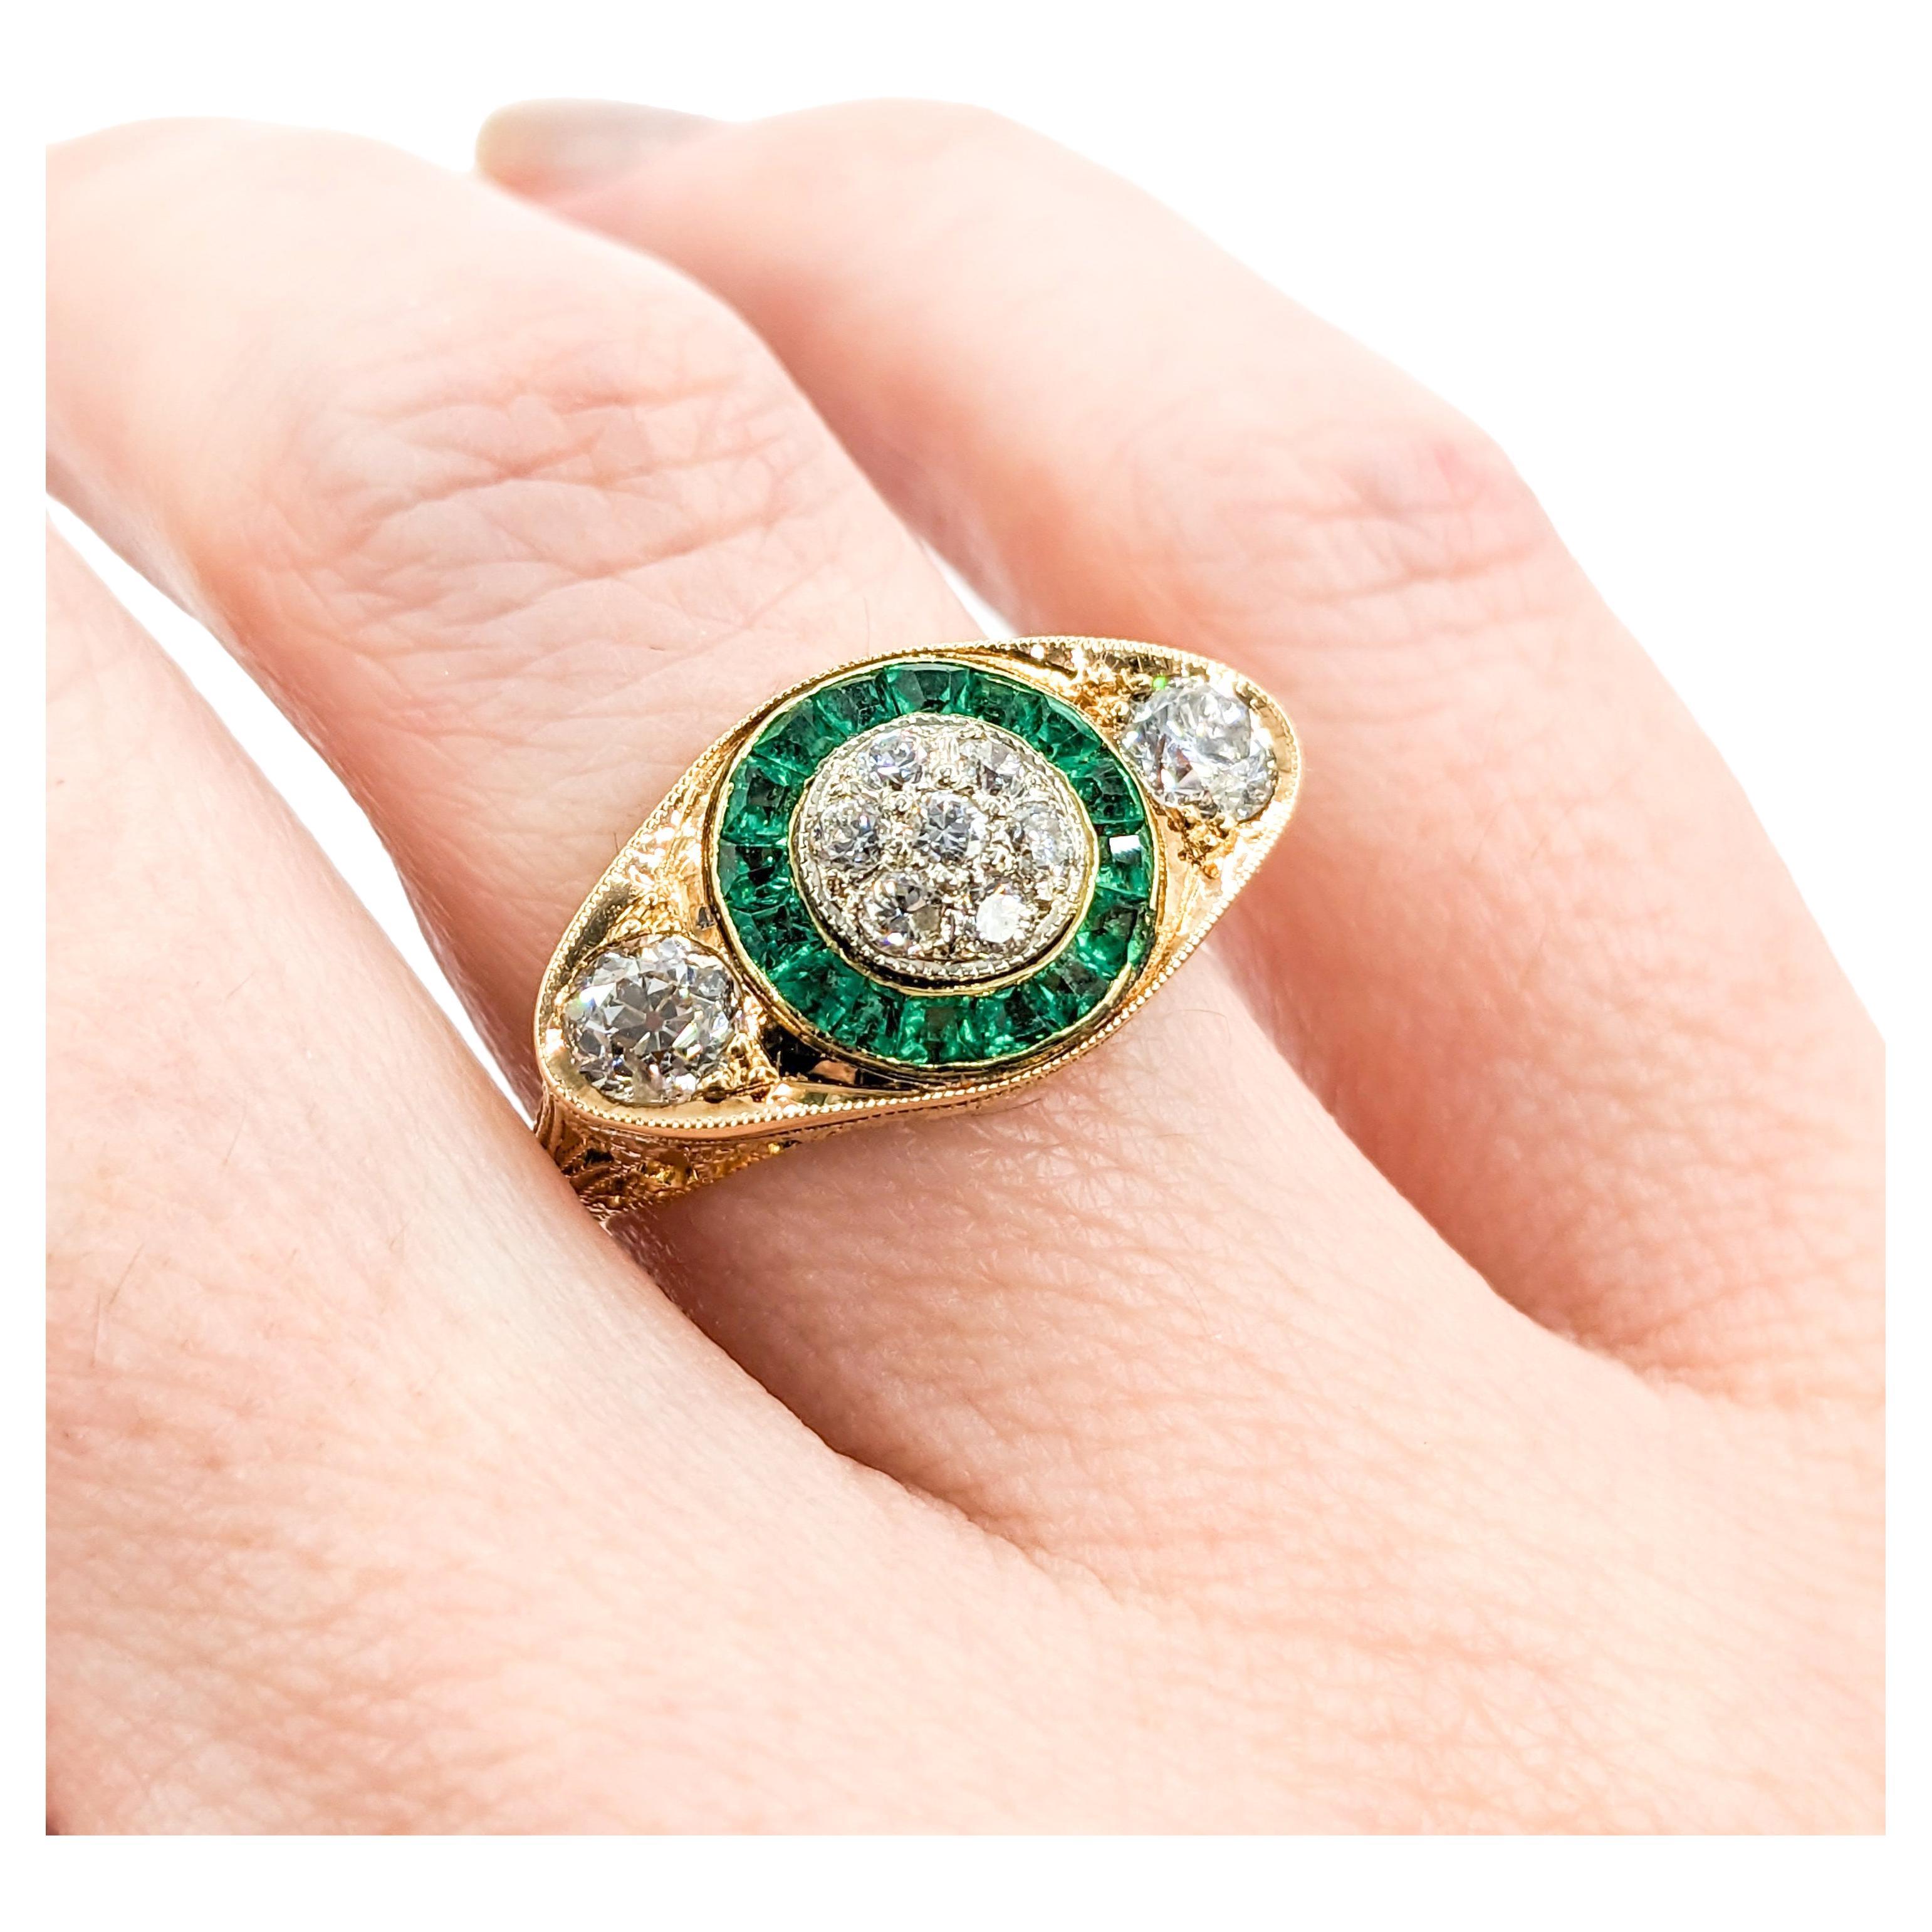 Antique Old European Diamond & Emeralds Target Ring in 14K Gold